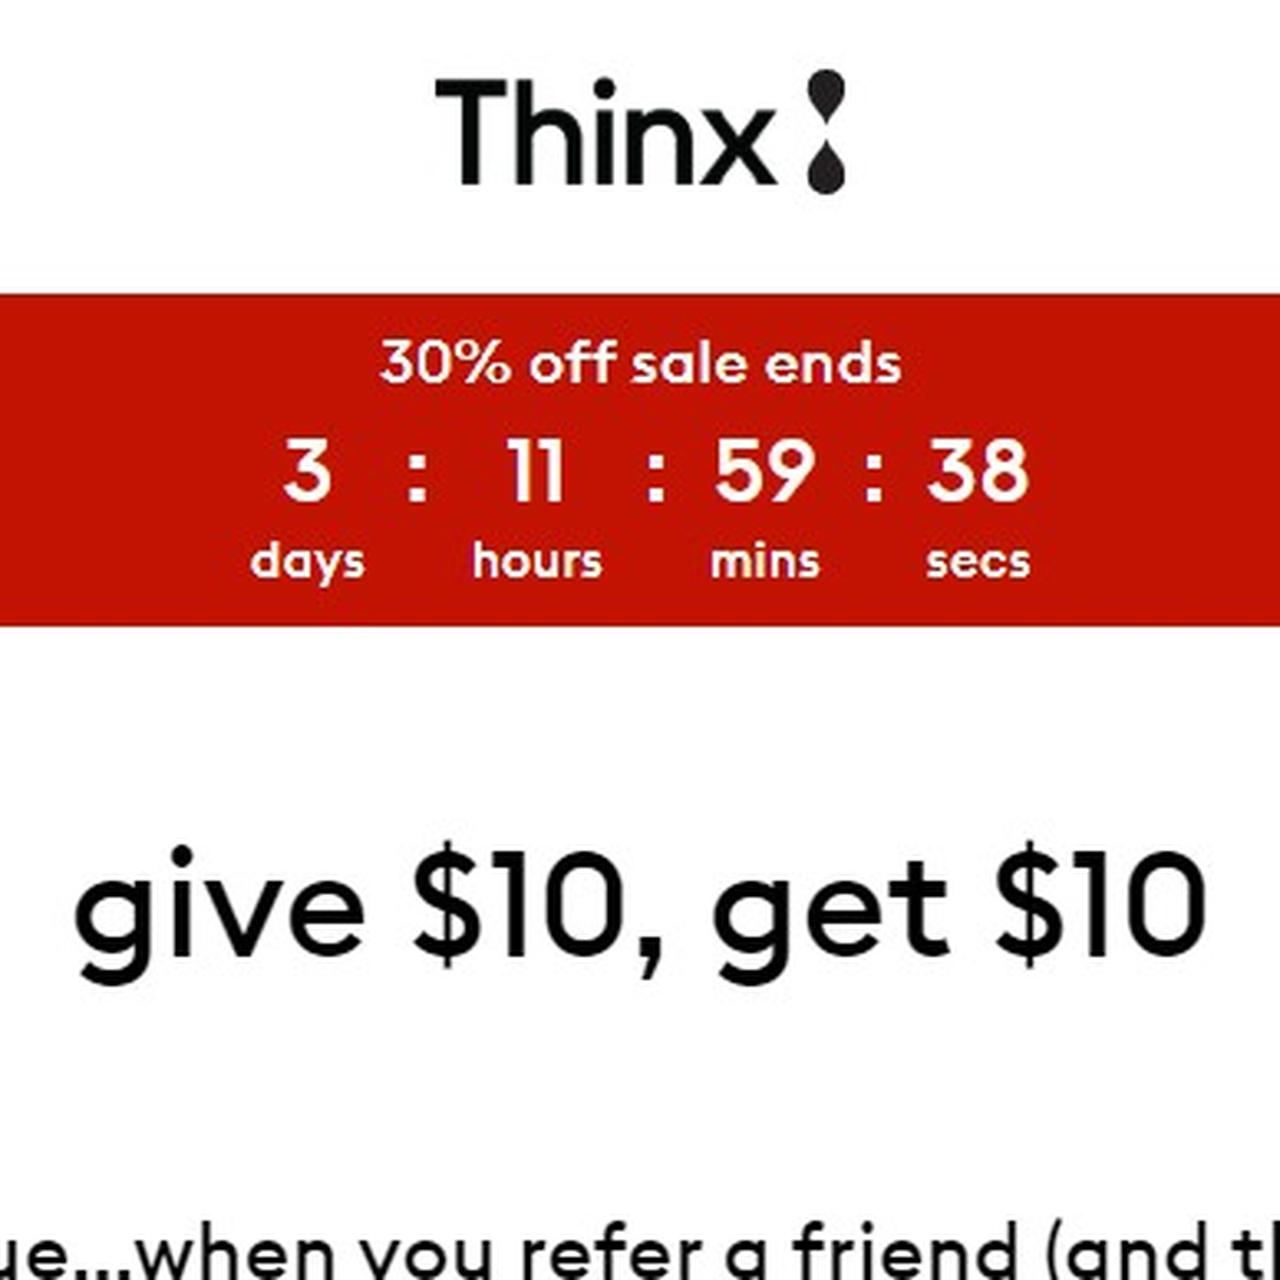 $10 off Thinx period underwear referral/coupon - Depop